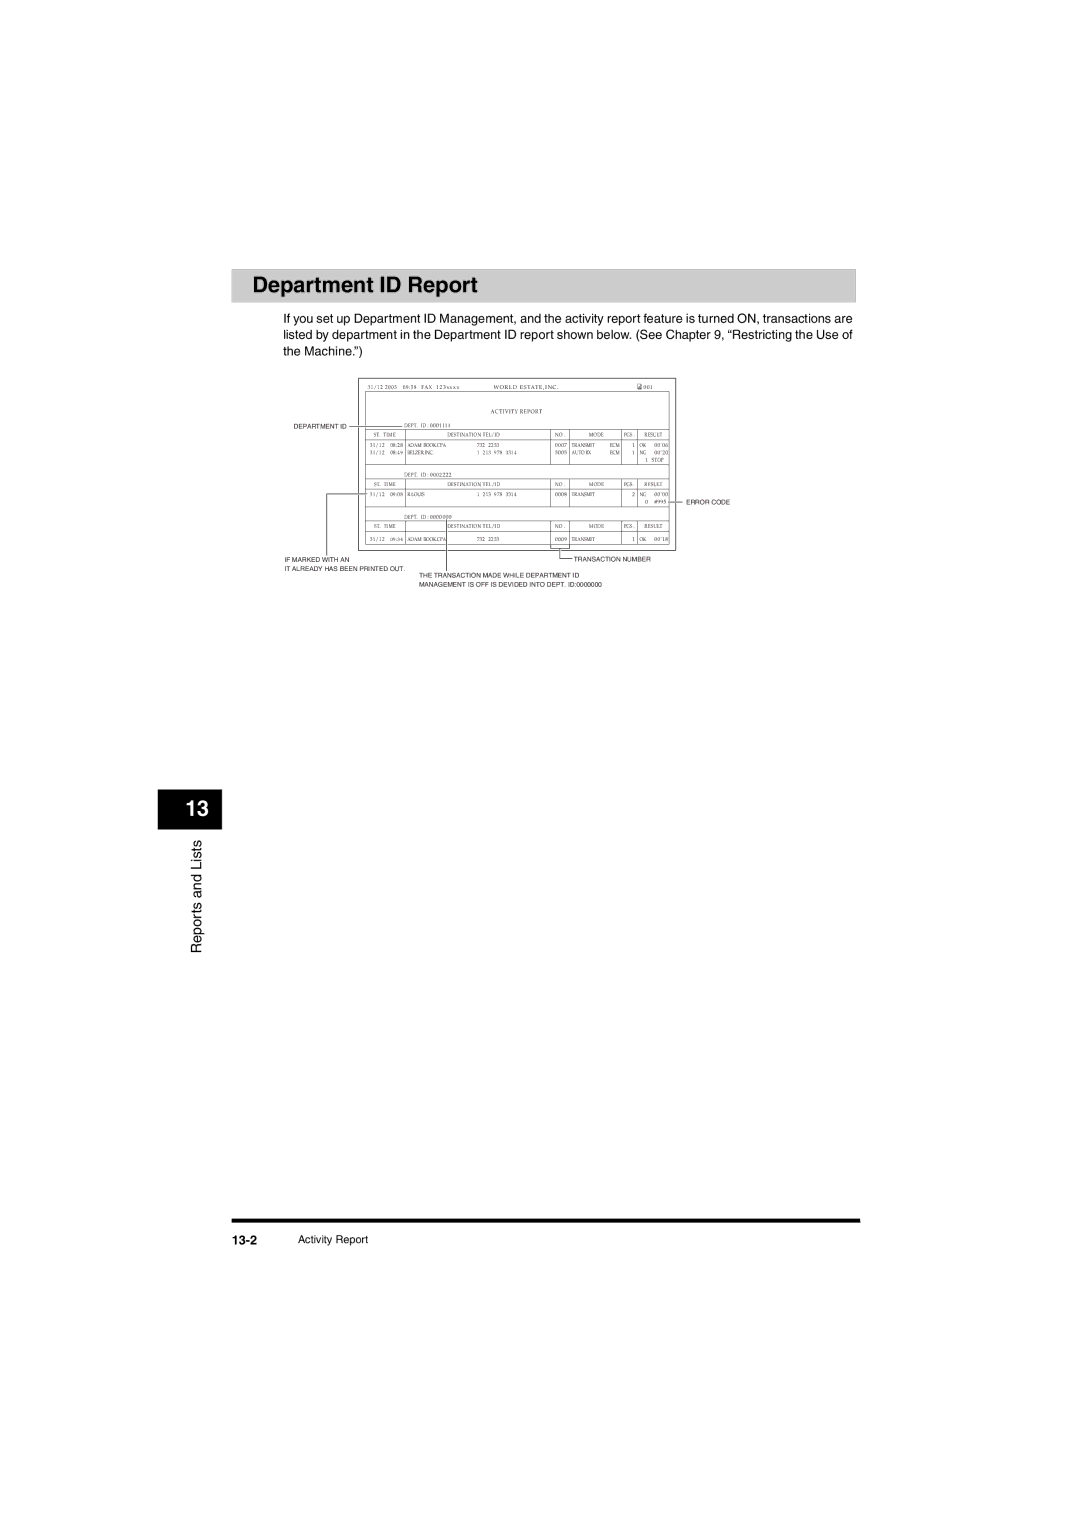 Canon L380S manual Department ID Report, 13-2 